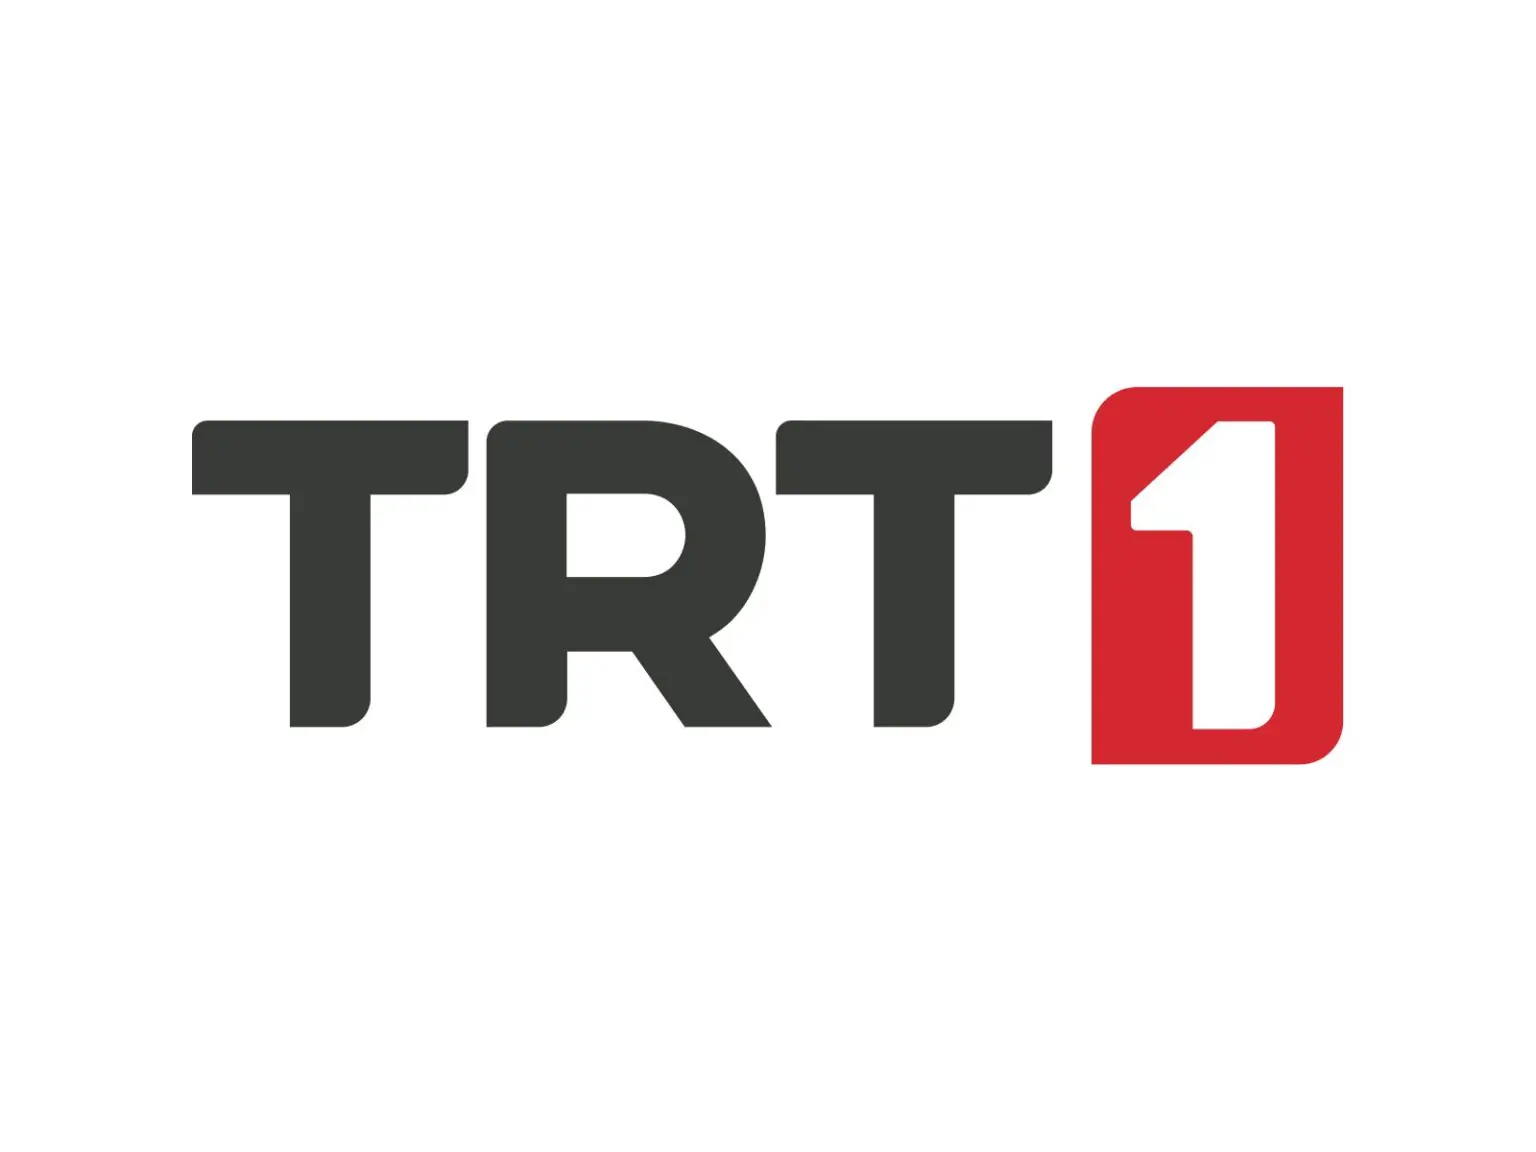 Trt1 canli yayim. TRT 1. TRT 1 logo. TRT Haber логотип. Канал trt1 ТВ Турция.